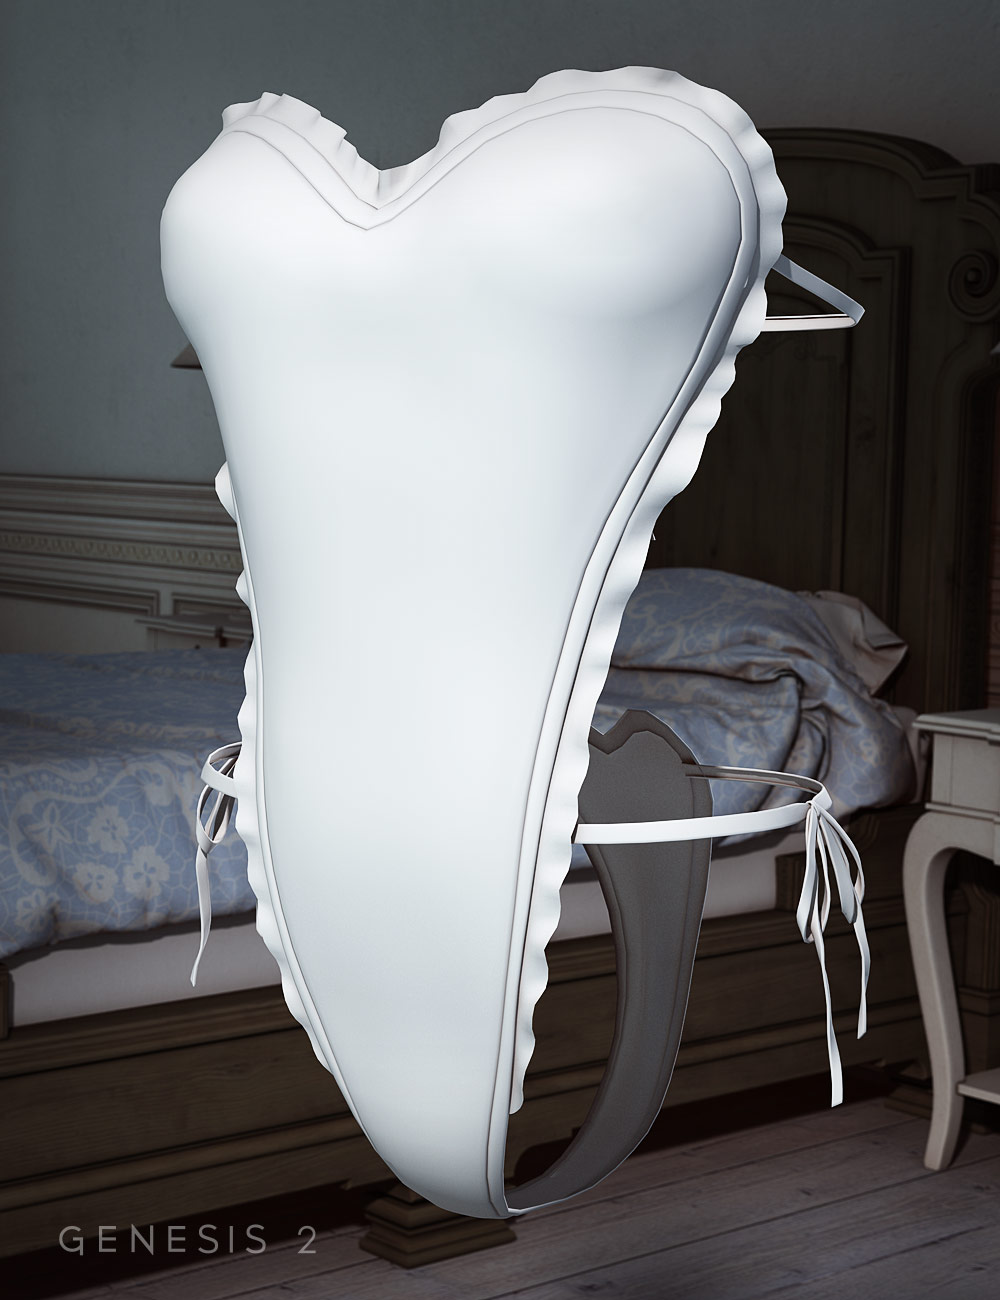 Lacy Teddy Lingerie for Genesis 2 Female(s) by: OziChickXena, 3D Models by Daz 3D